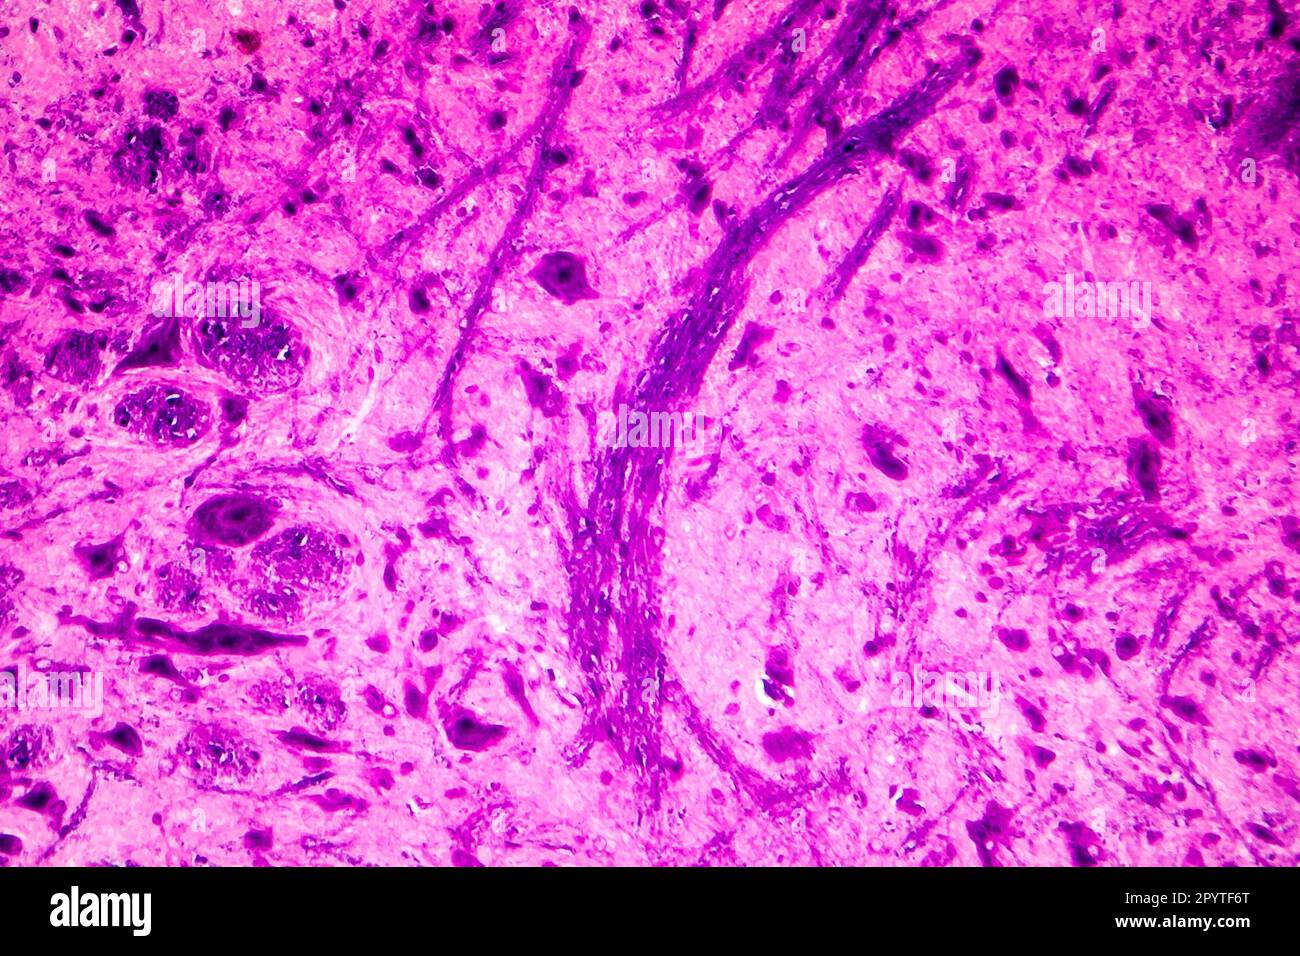 Human spinal cord, close-up view, light photomicrograph Stock Photo